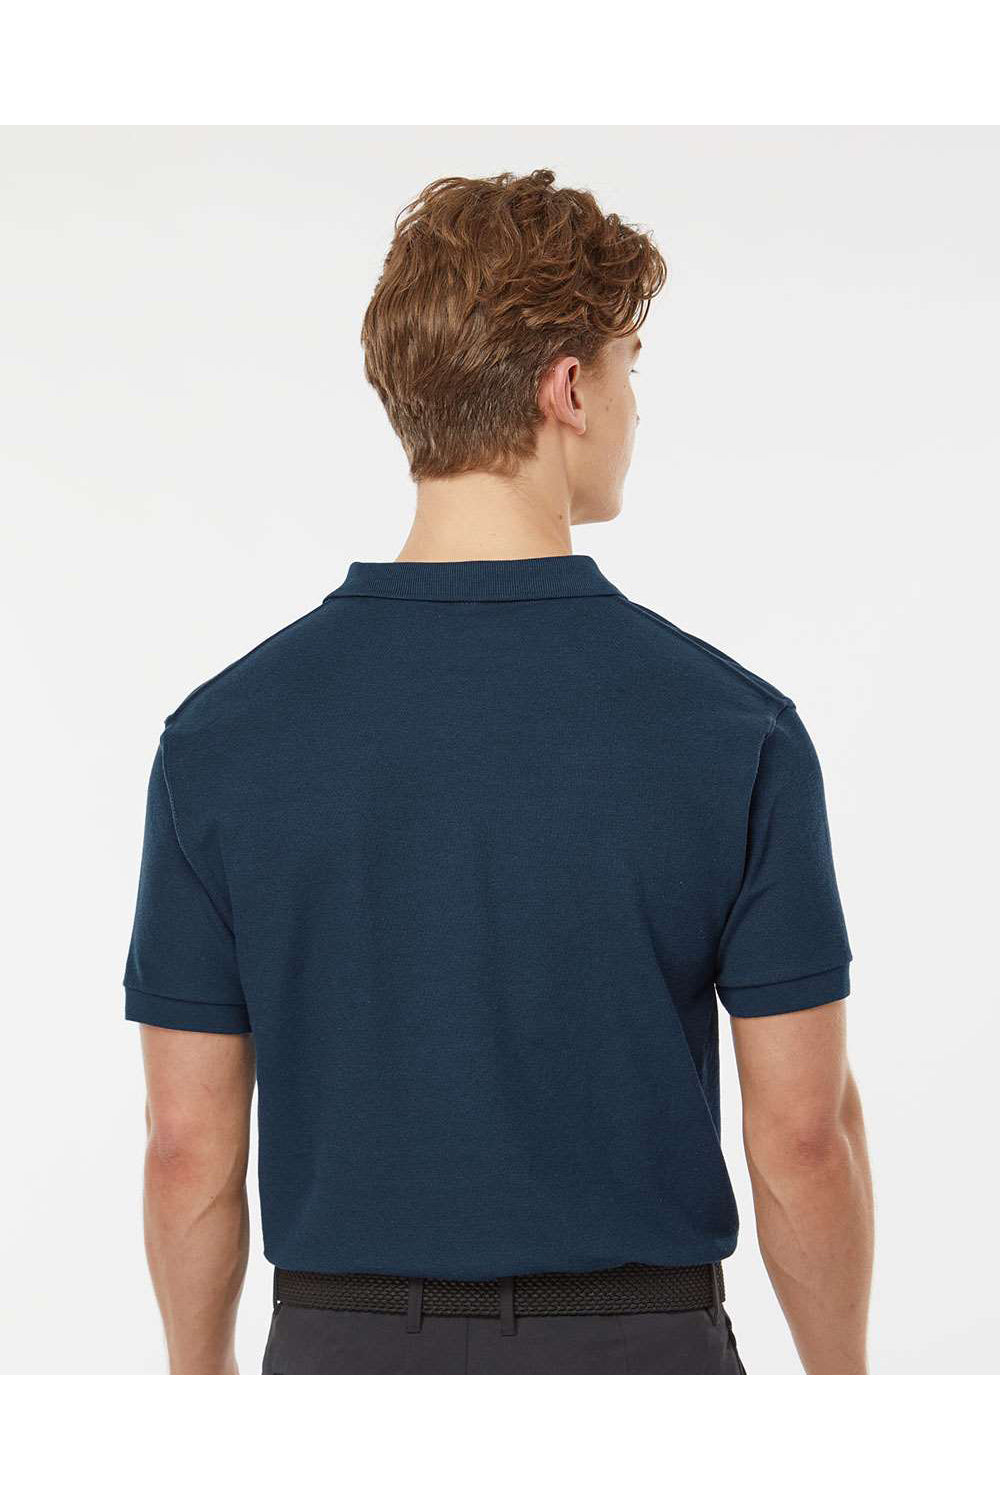 Tultex 400 Mens Sport Shirt Sleeve Polo Shirt Navy Blue Model Back